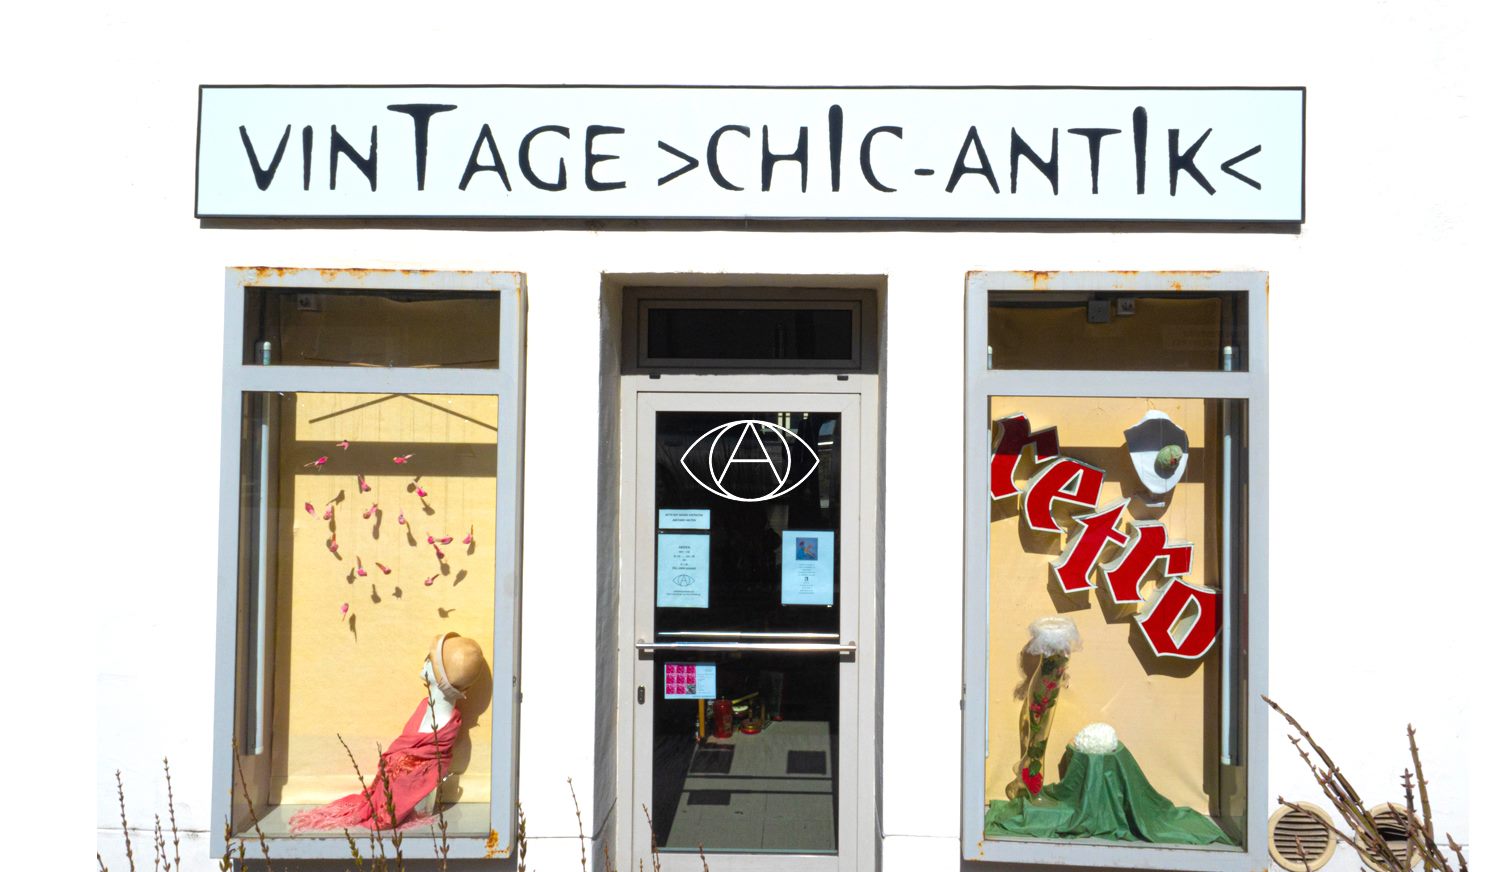 Die Fassade des Vintage Chic Antik Shops in Klagenfurt